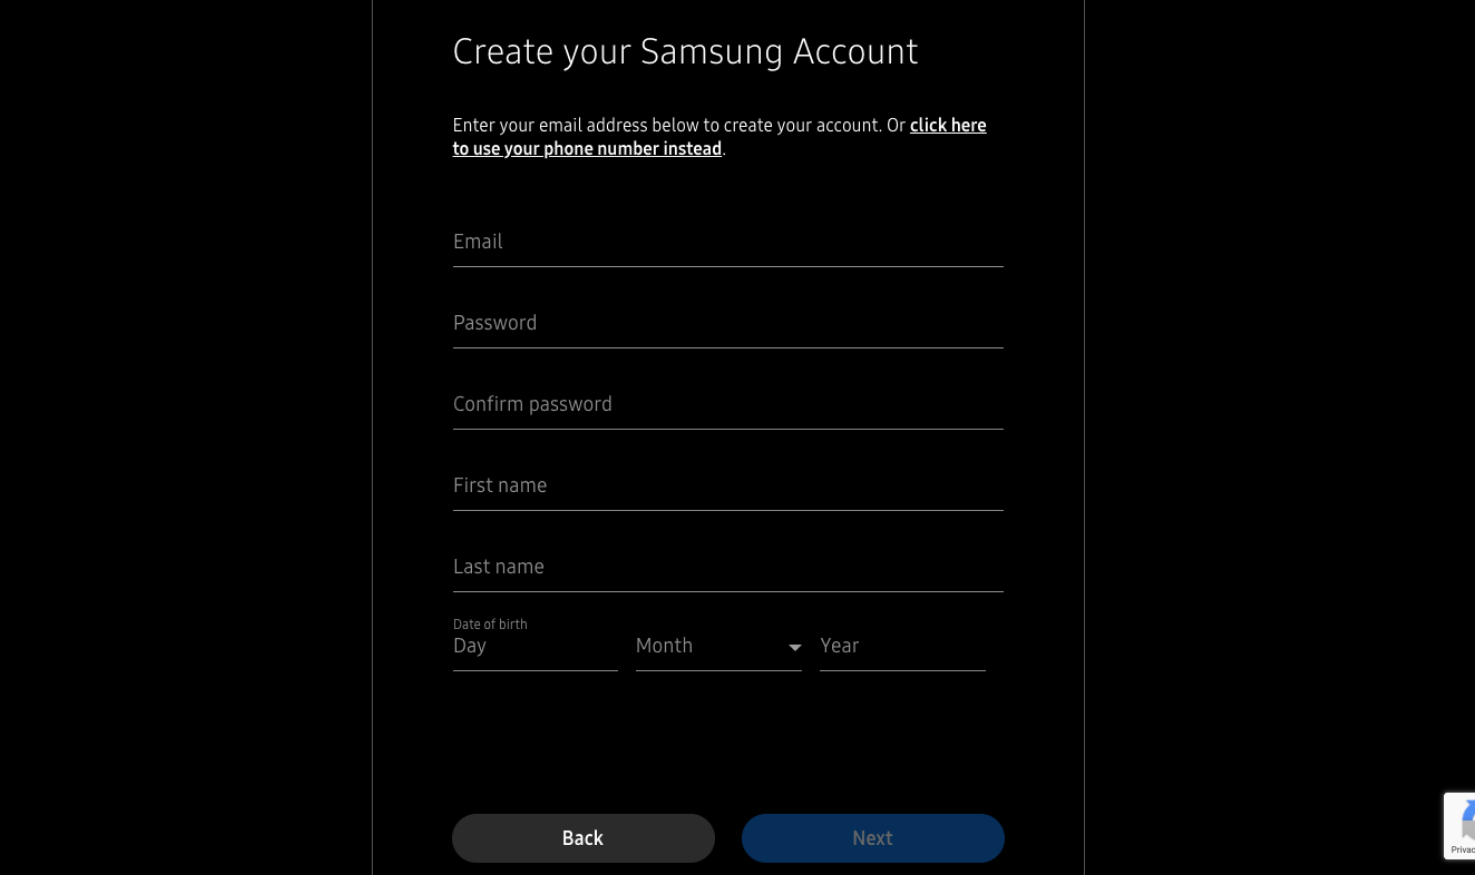 Samsung Account creation page